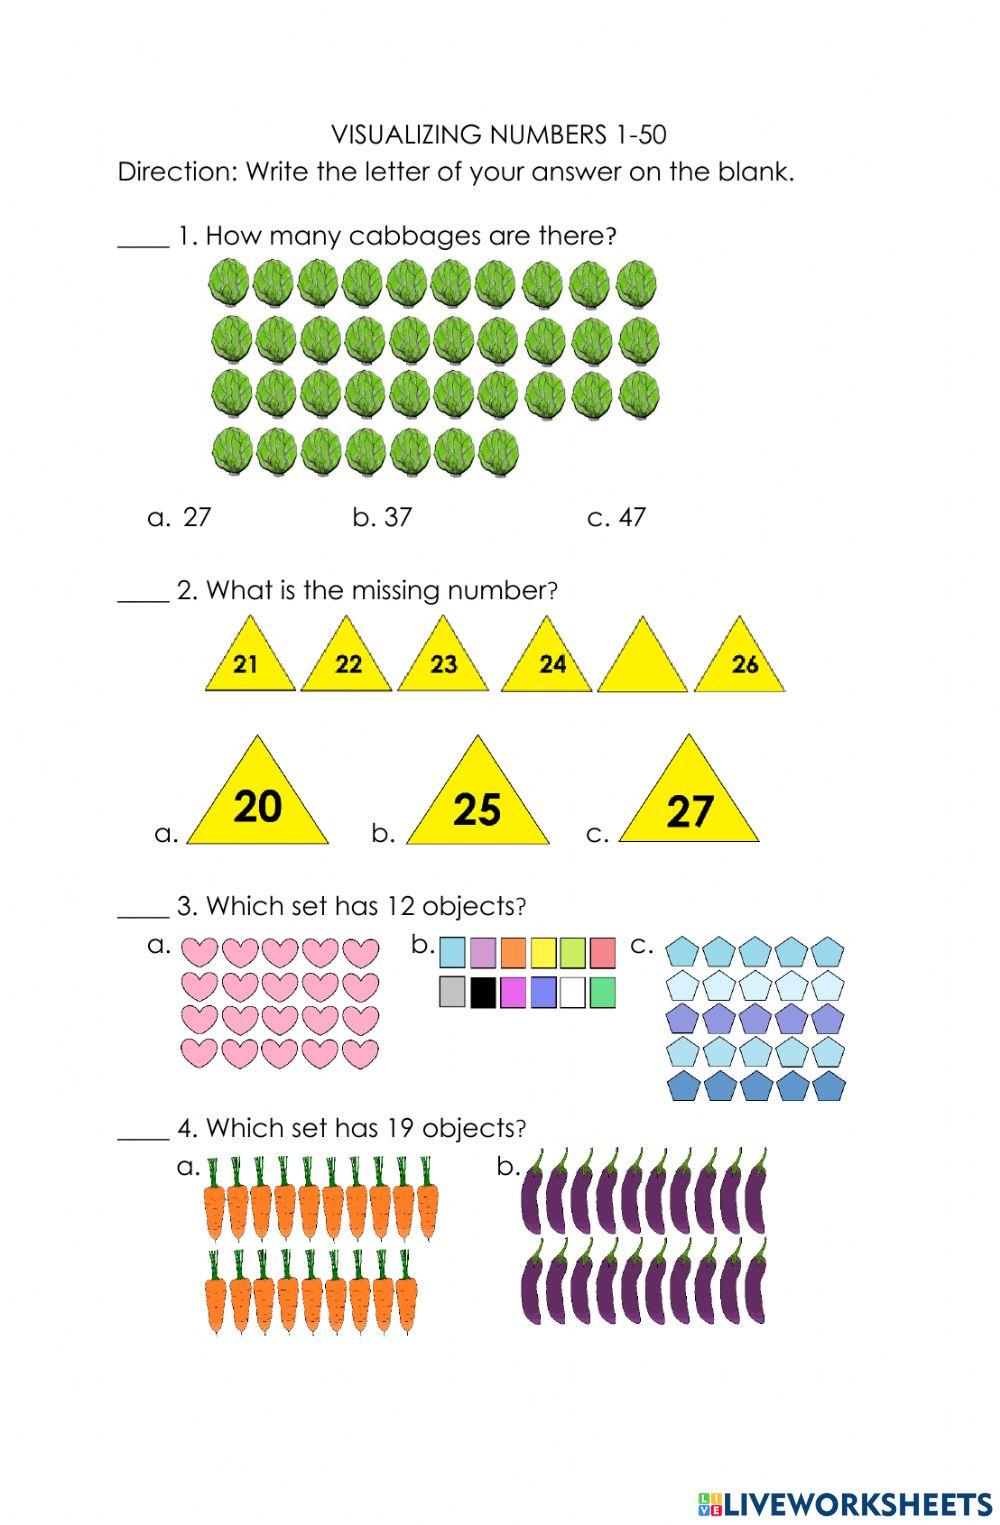 Visualizing Numbers 1-50 worksheet | Live Worksheets